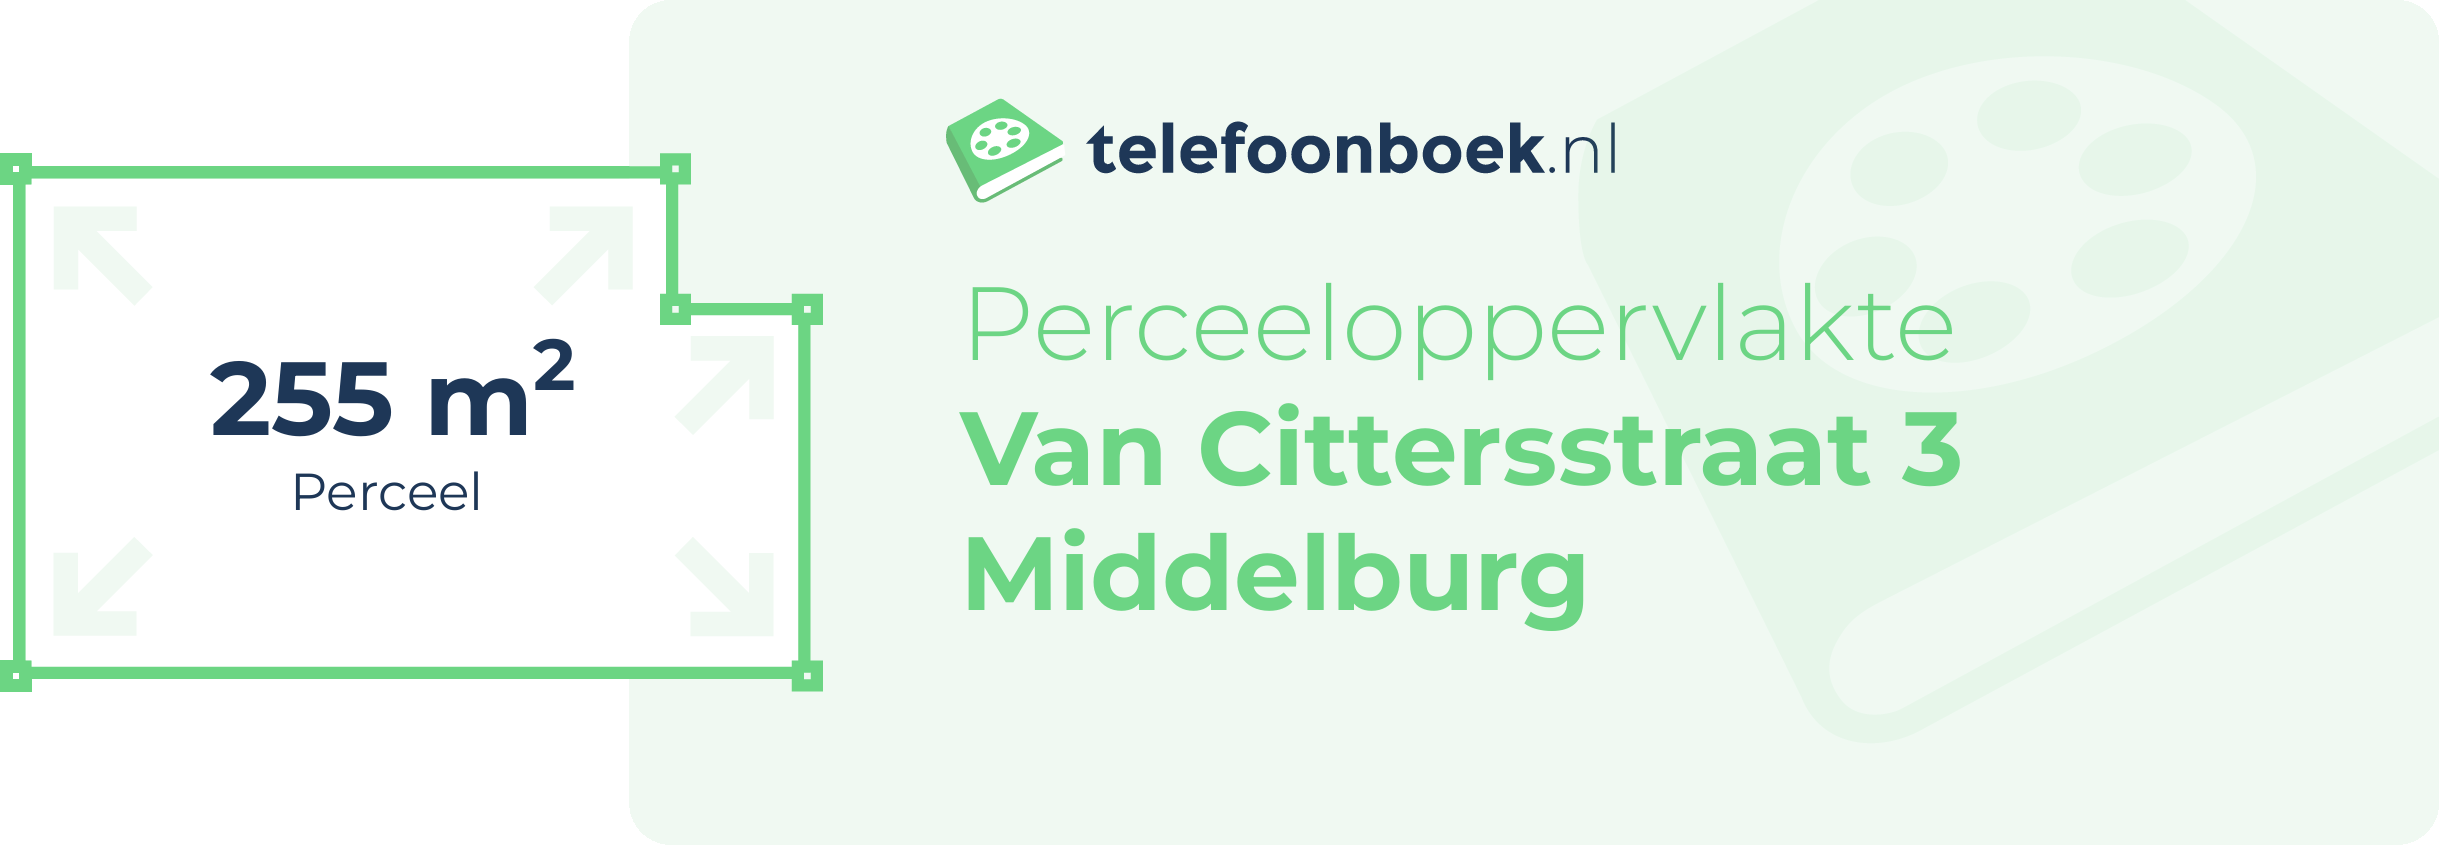 Perceeloppervlakte Van Cittersstraat 3 Middelburg